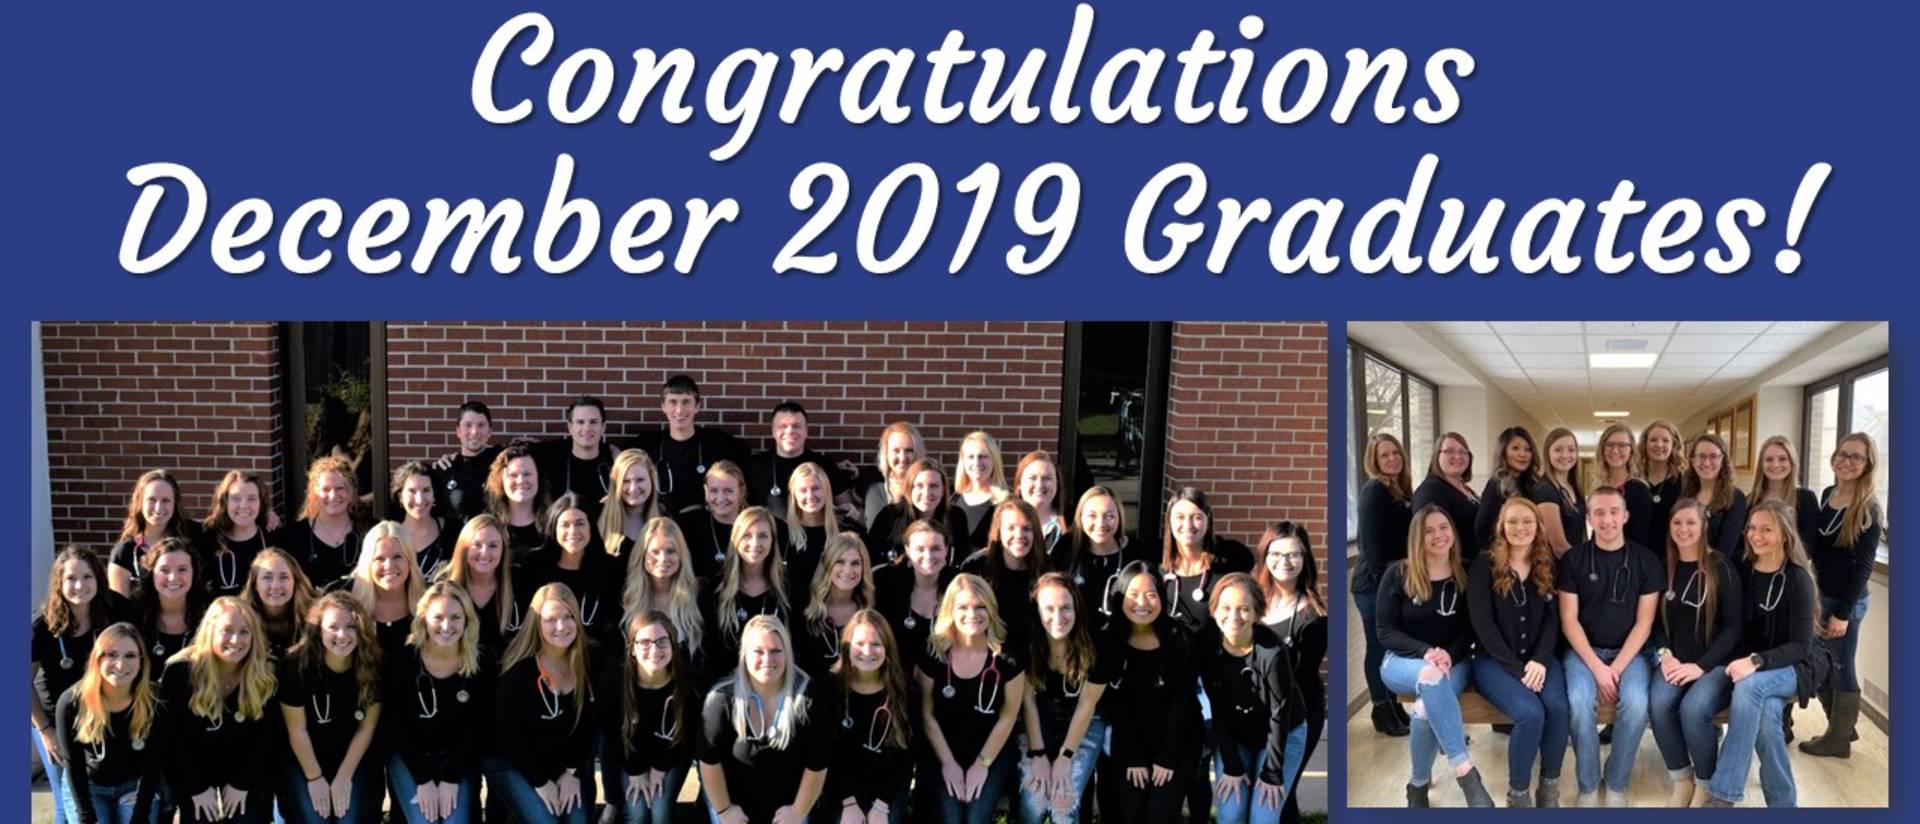 Fall 2019 graduates from the nursing program